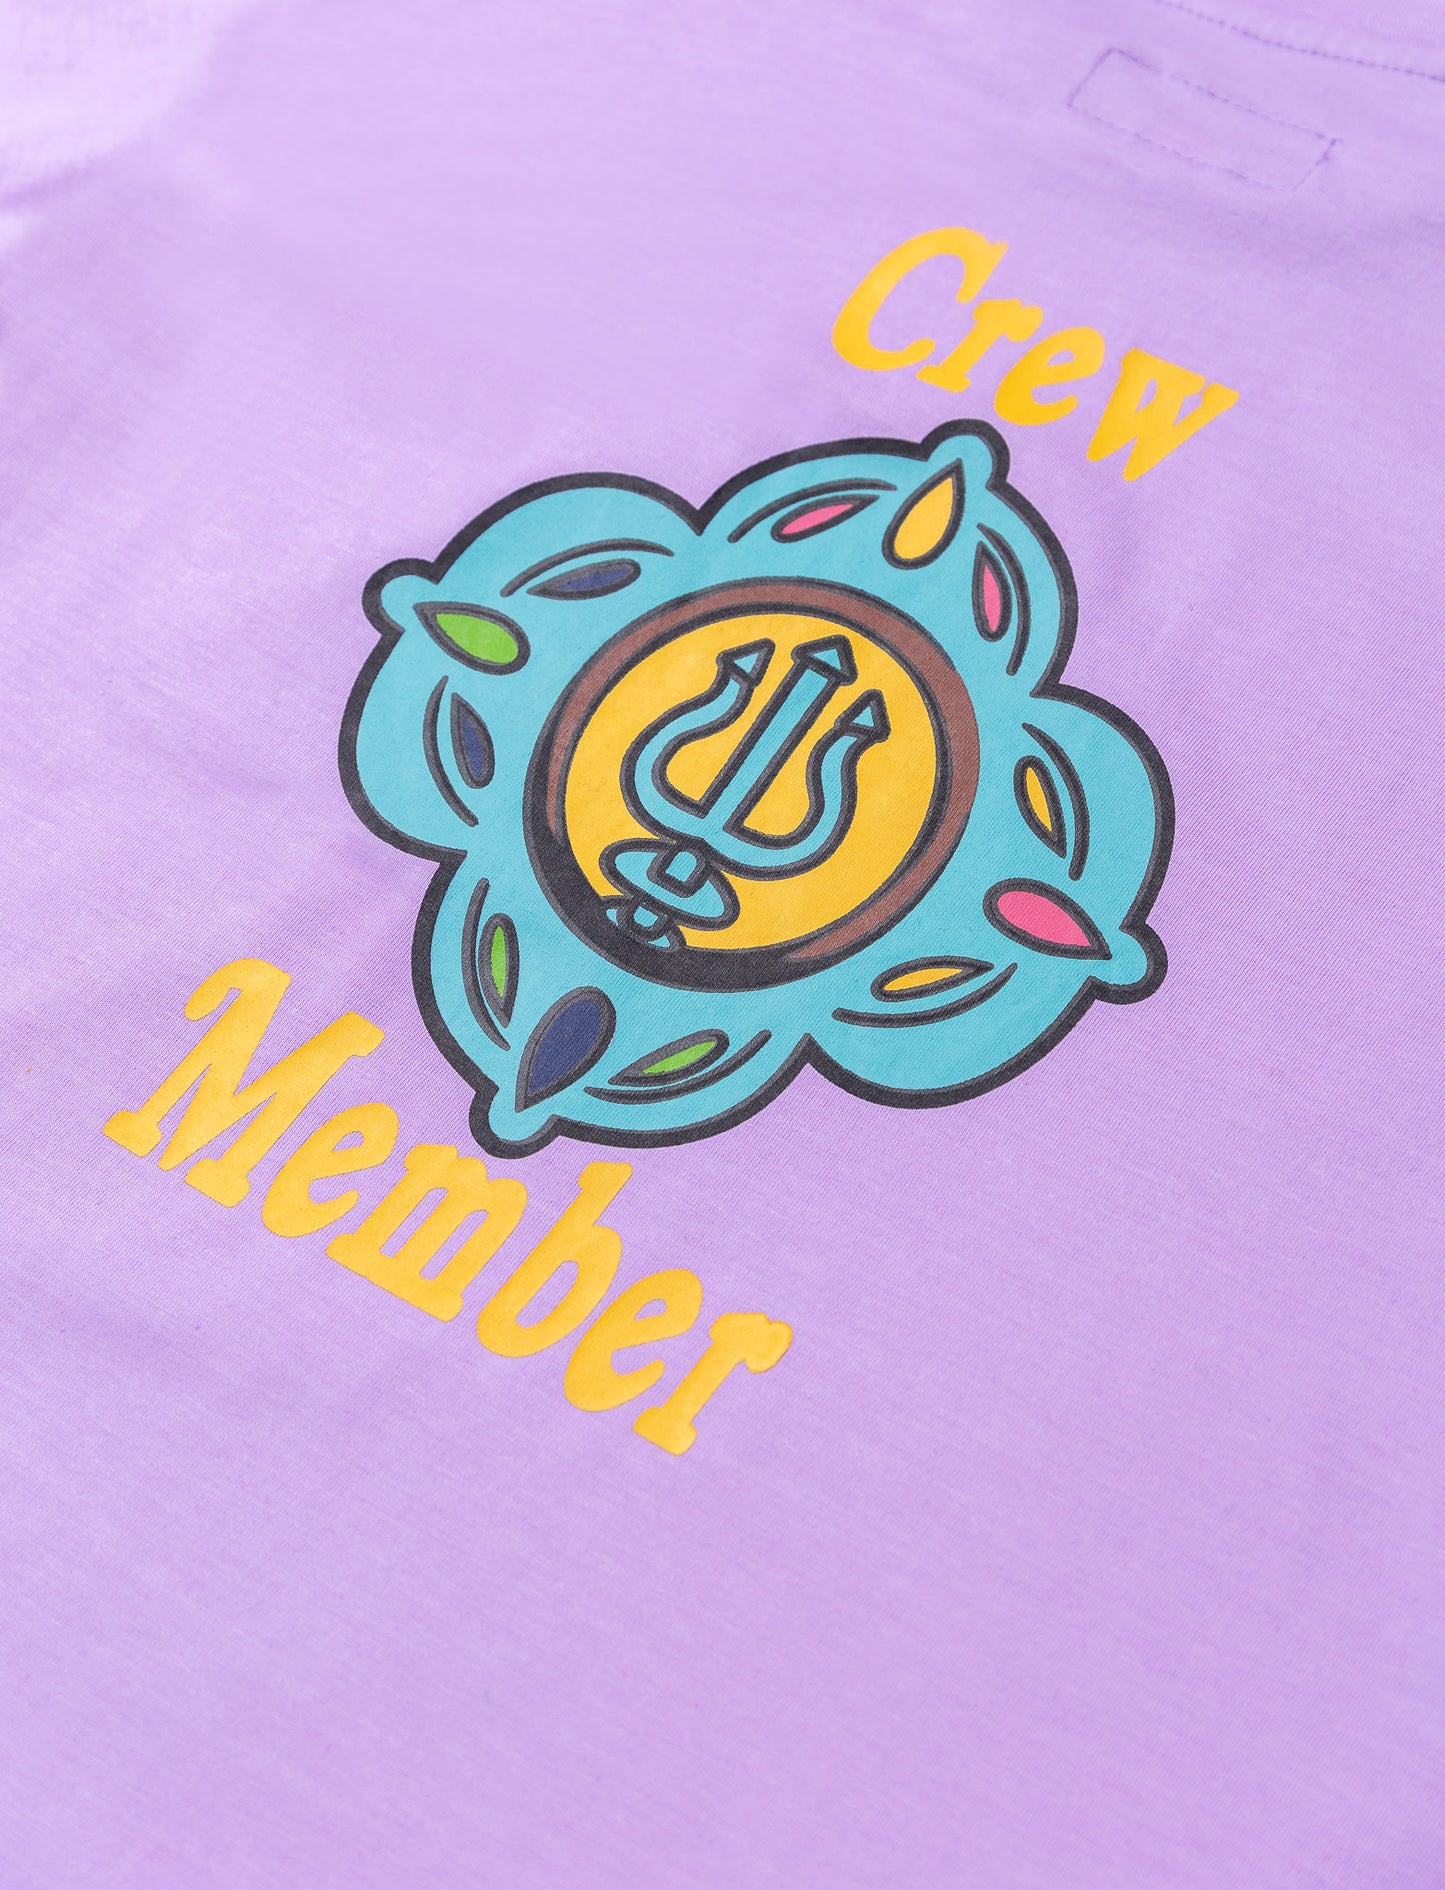 Crew Member Lavender Long Sleeve Shirt (Women's)